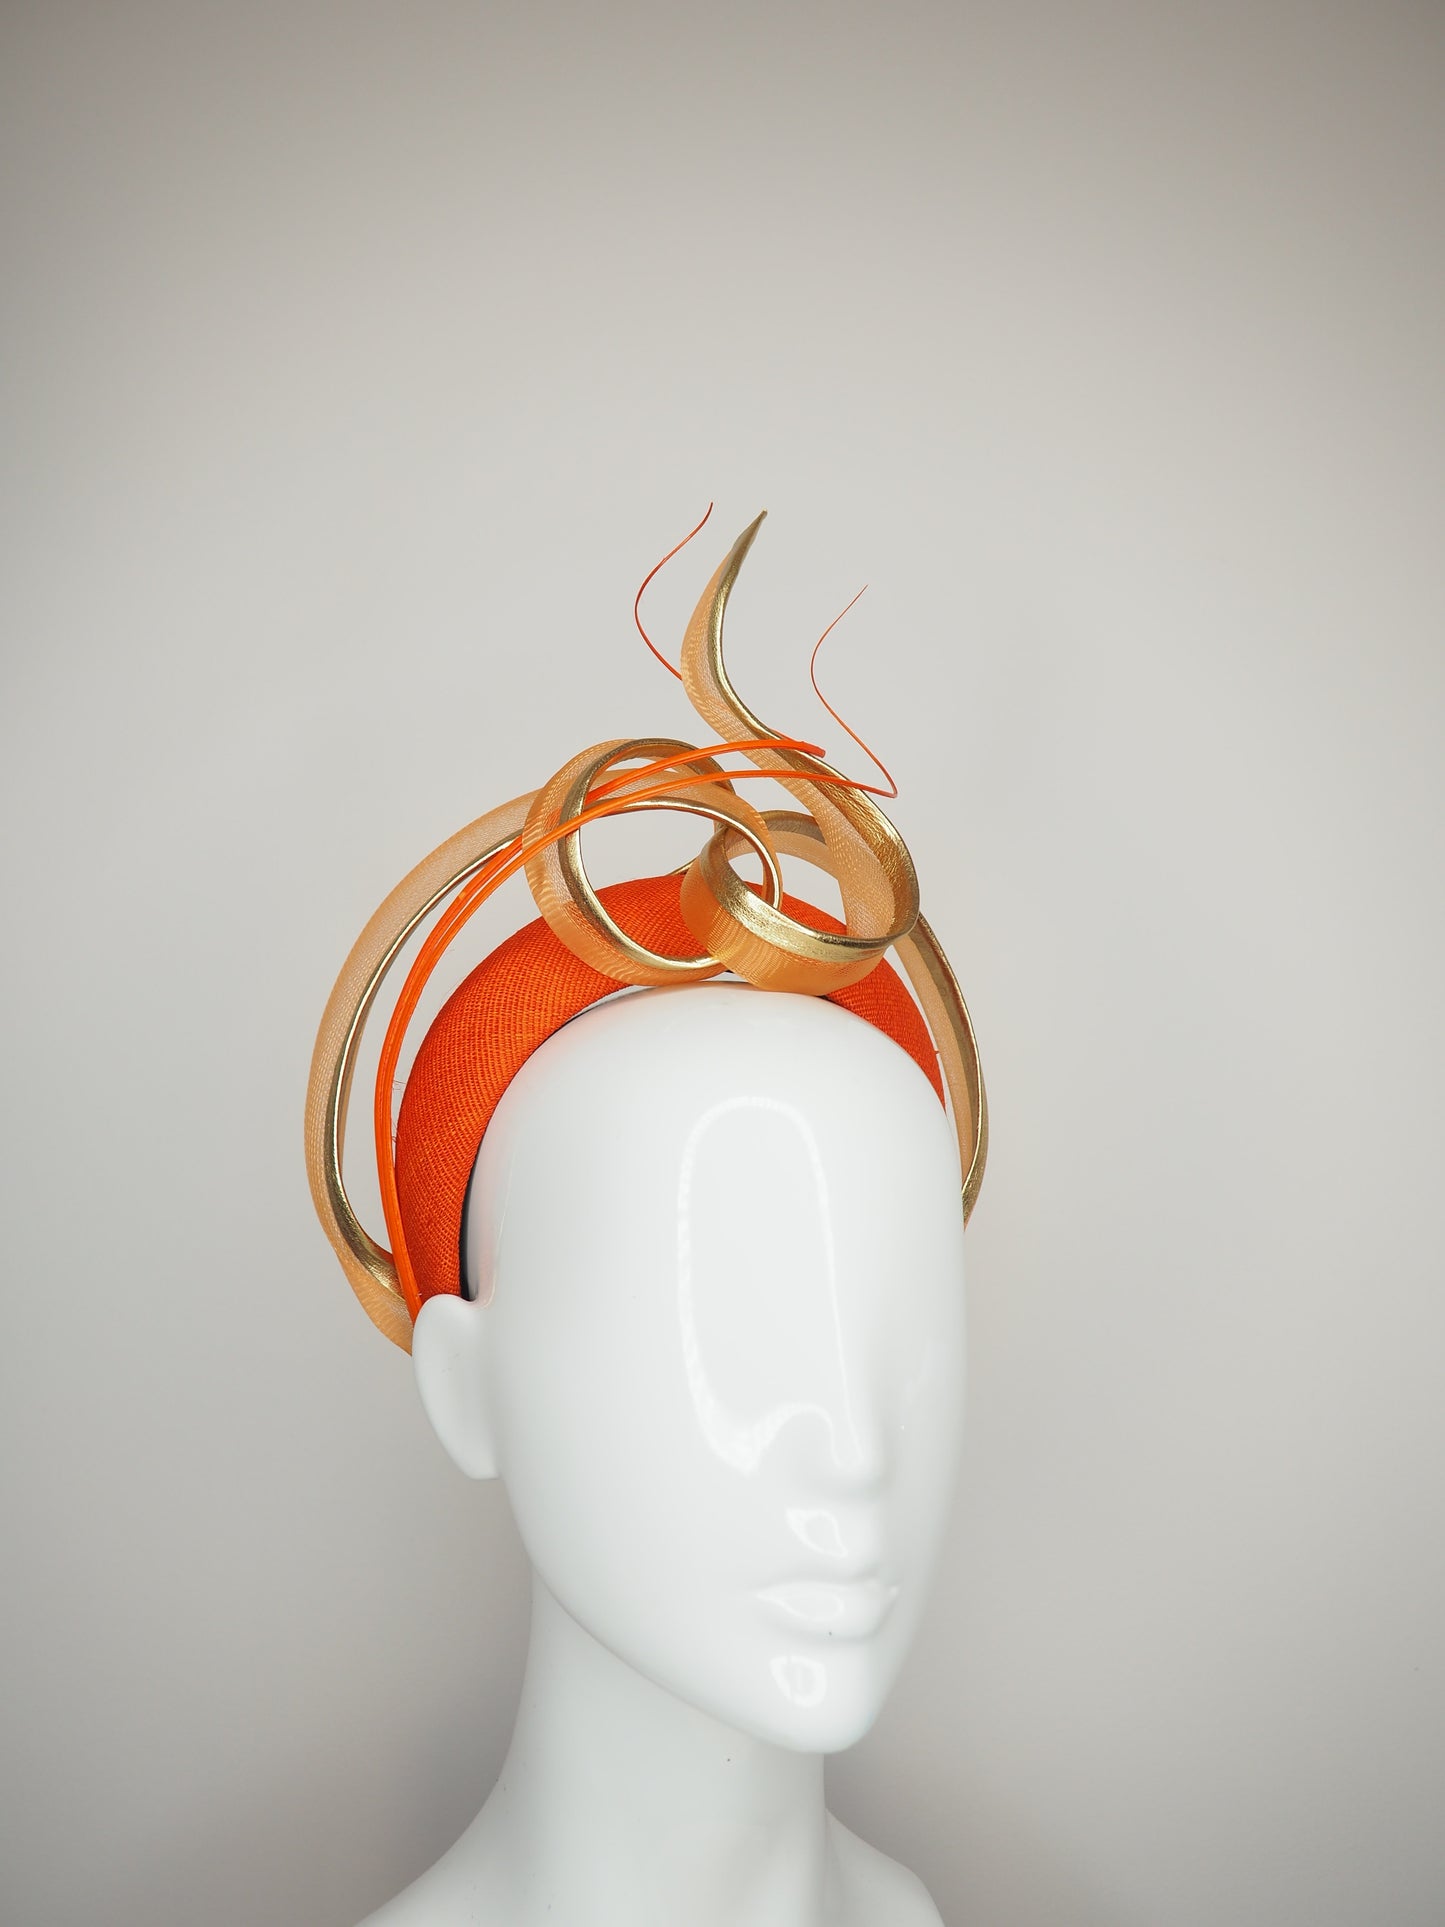 Golden Nova - Orange tinalak straw headband with golden leather edged crinoline swirl